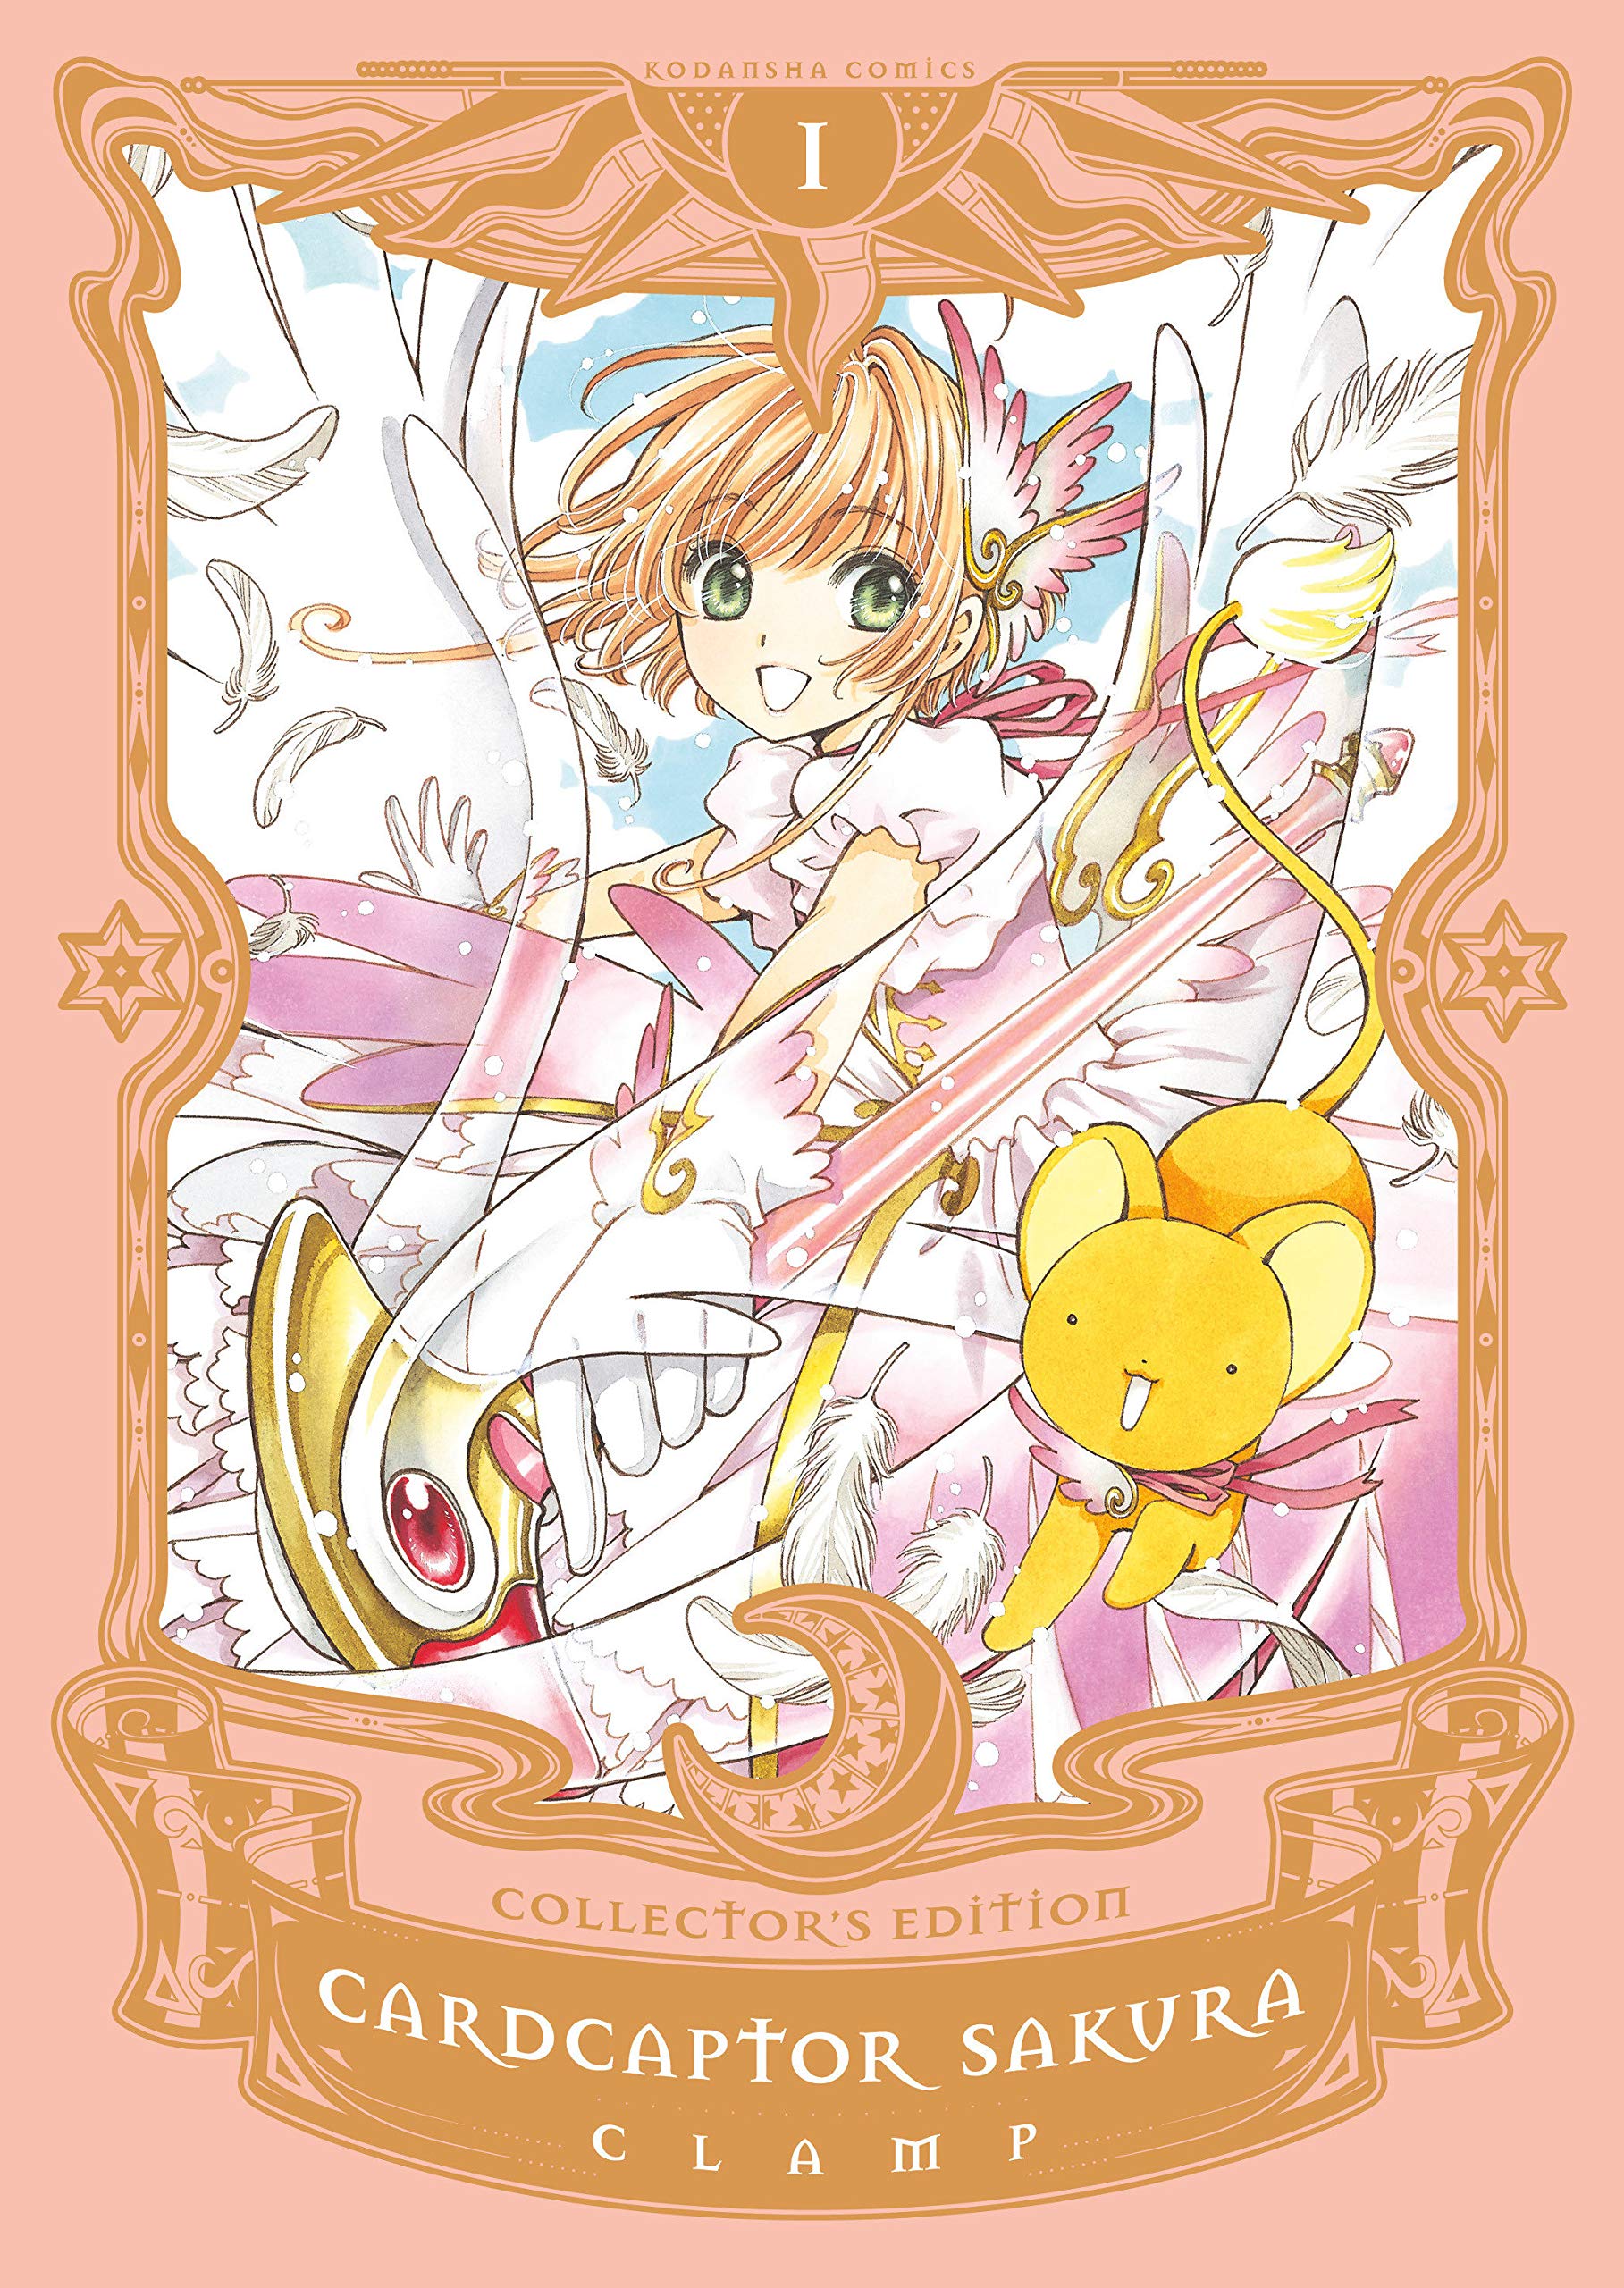 Cardcaptor Sakura book cover